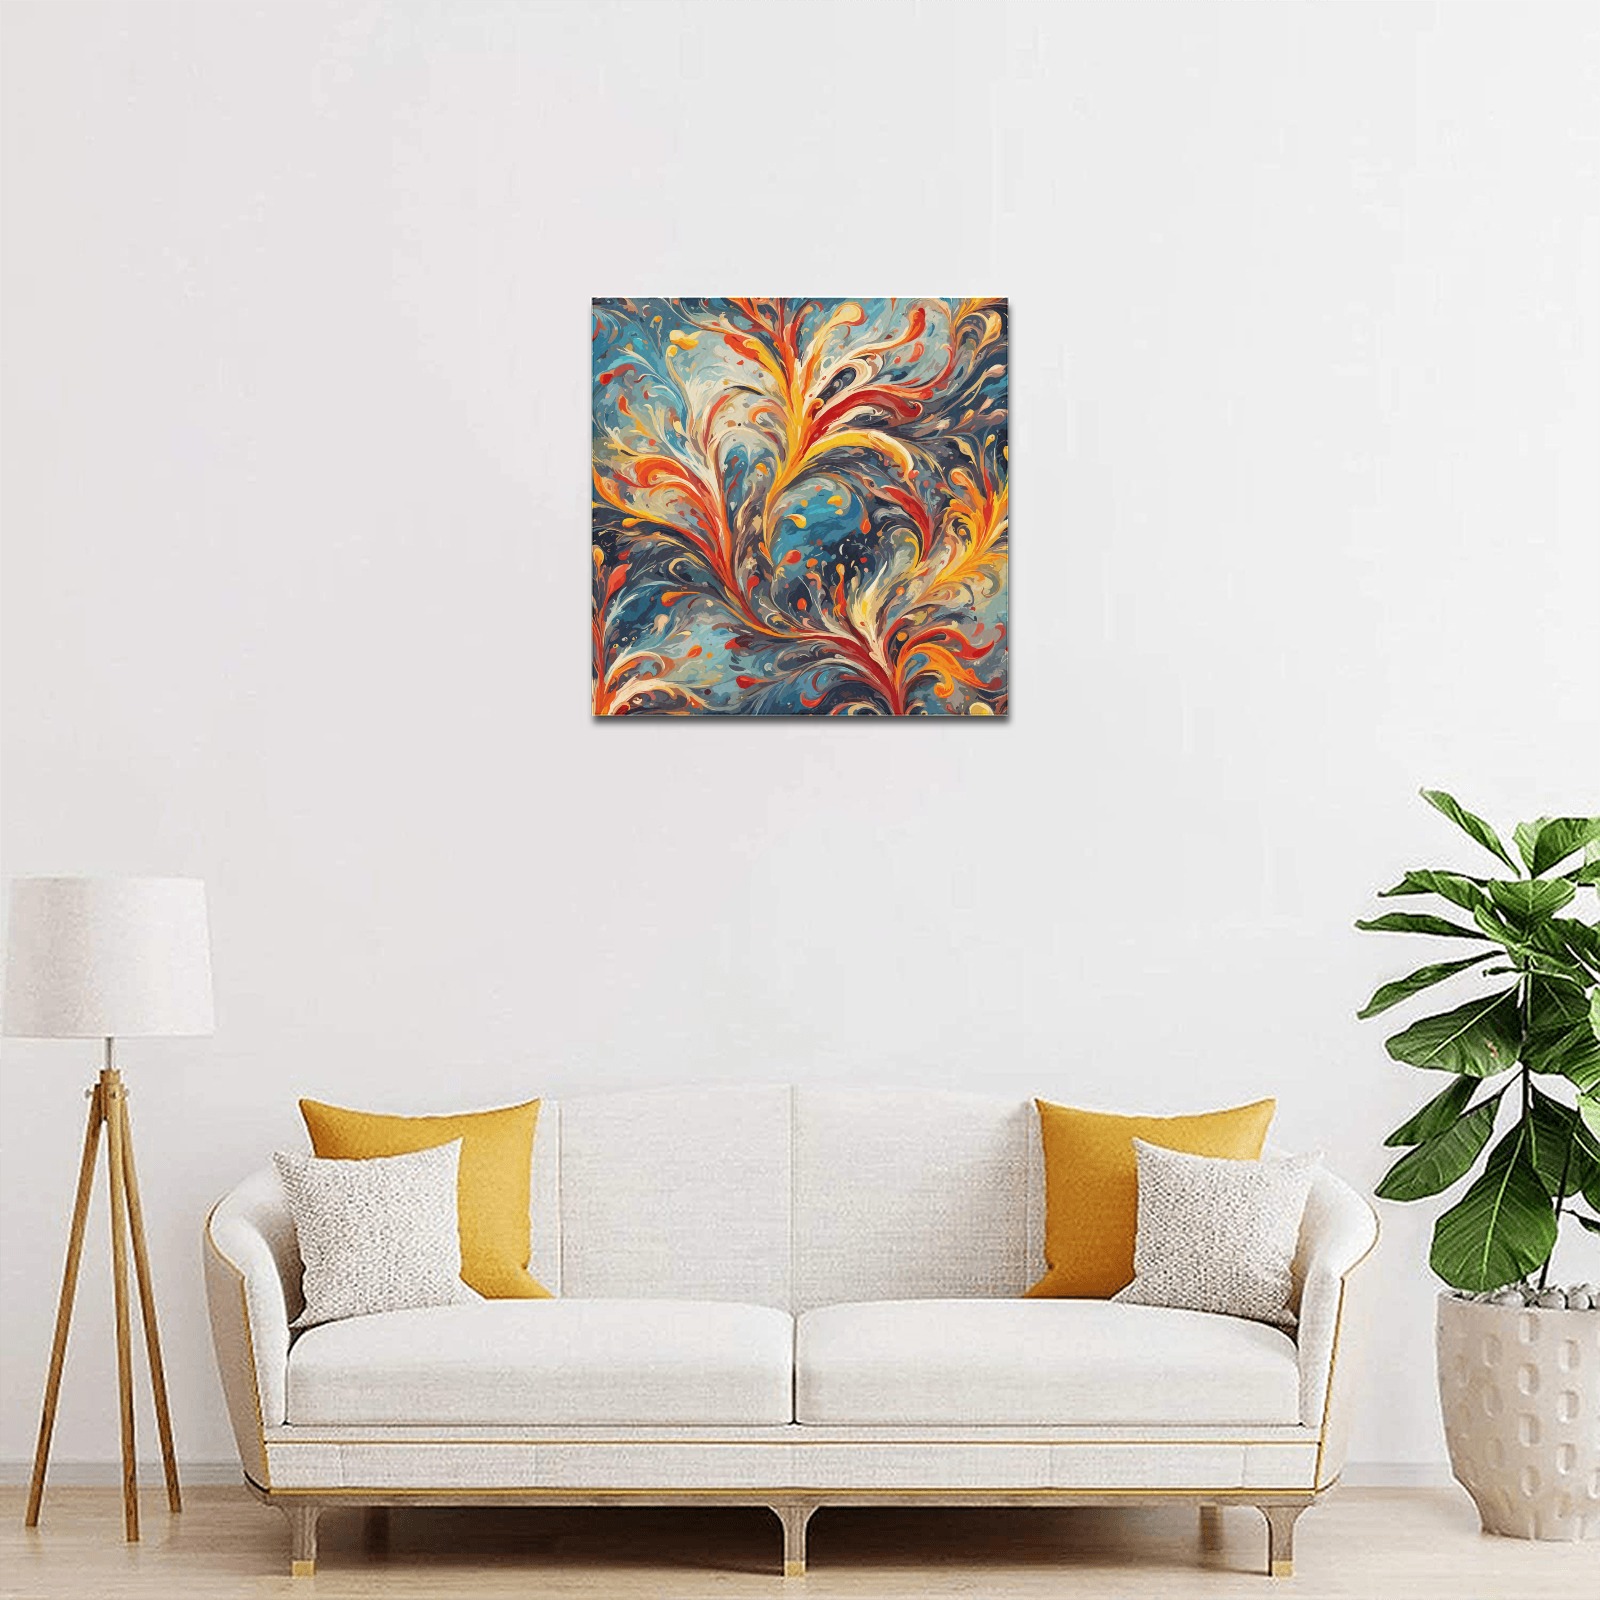 Increadible decorative floral ornamental art. Upgraded Canvas Print 16"x16"